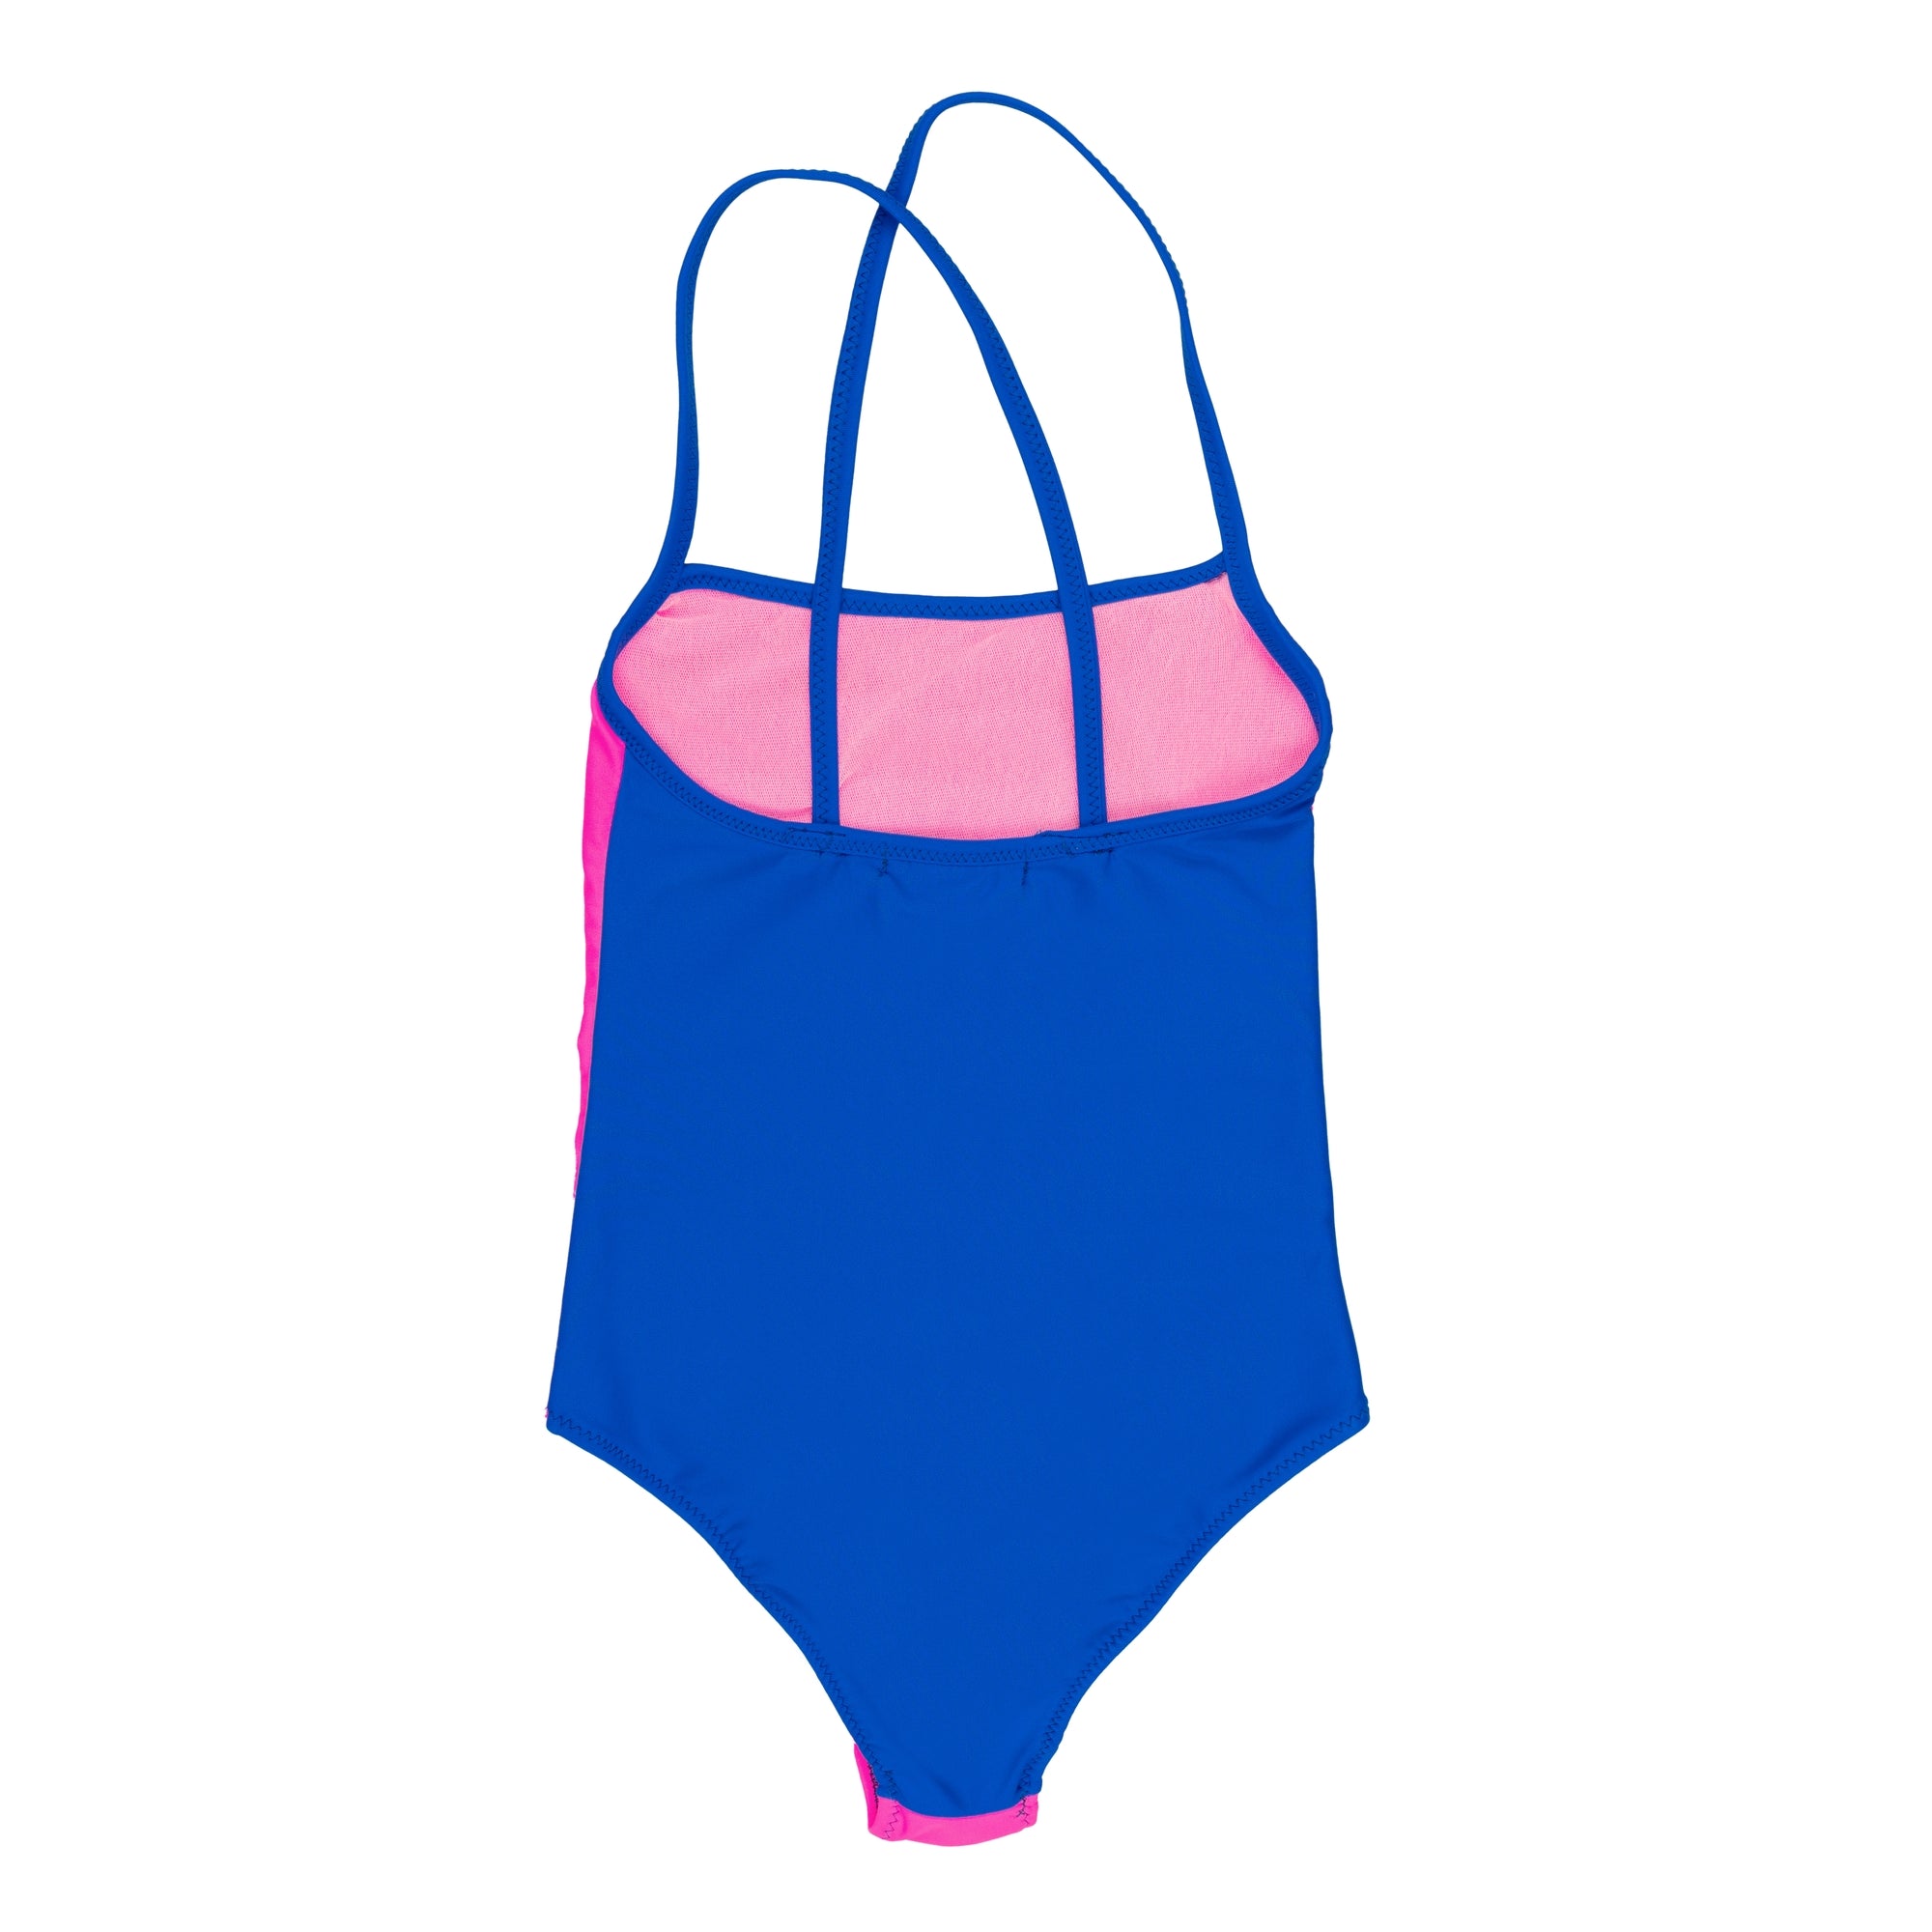 Color block one-piece swimsuit